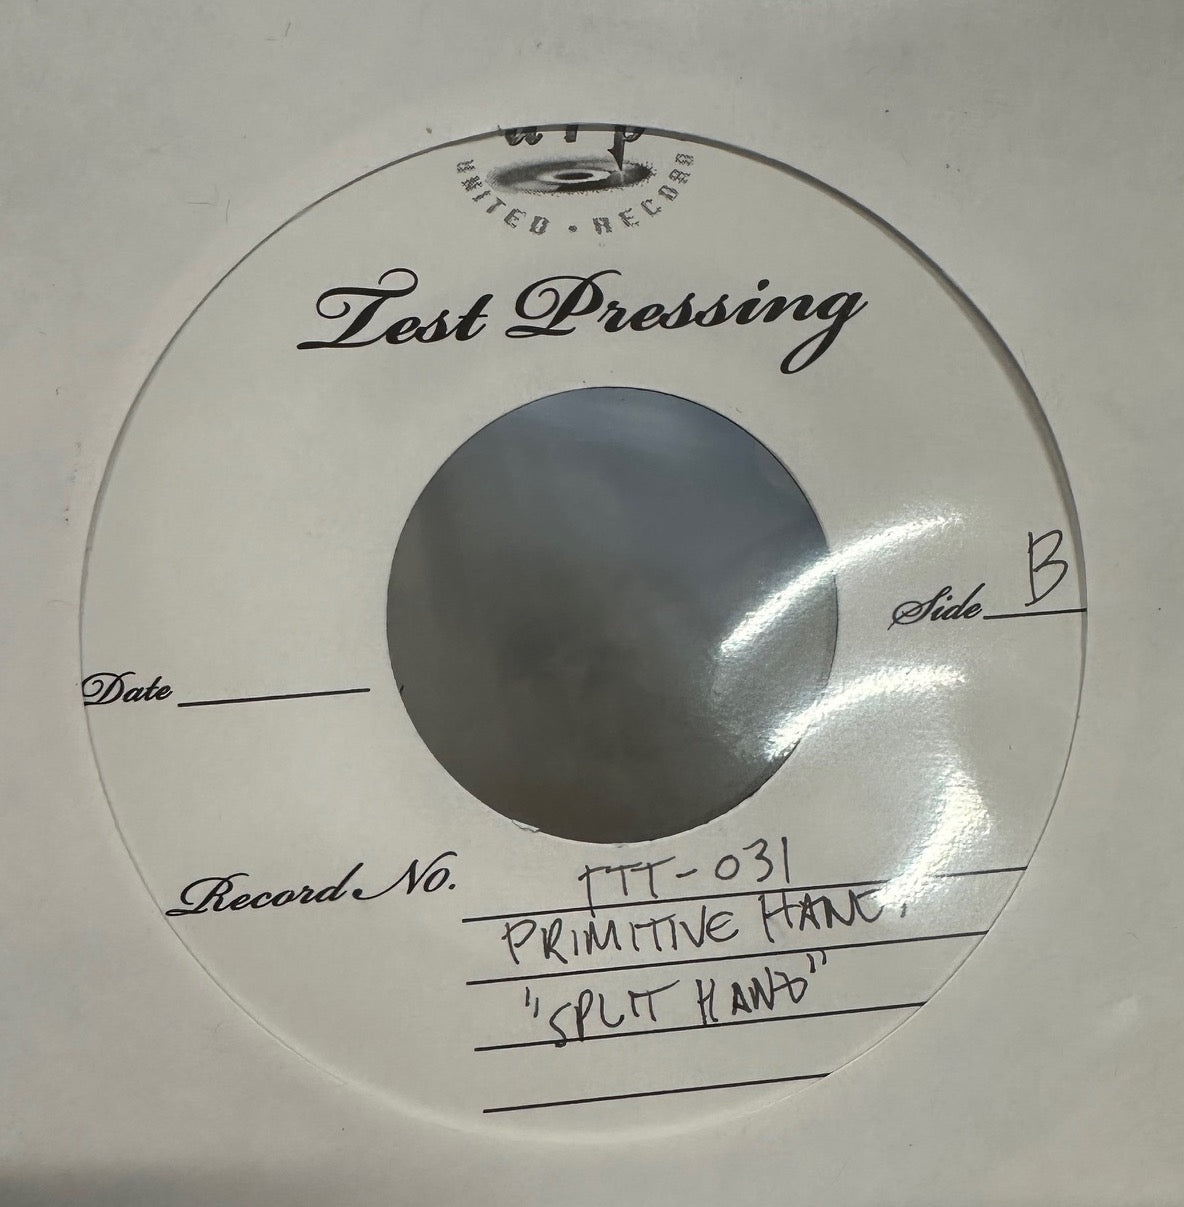 Primitive Hands – Split Mind - New 7" Single Record 2099 Tic Tac Totally! USA Test Pressing Promo Vinyl - Garage Rock